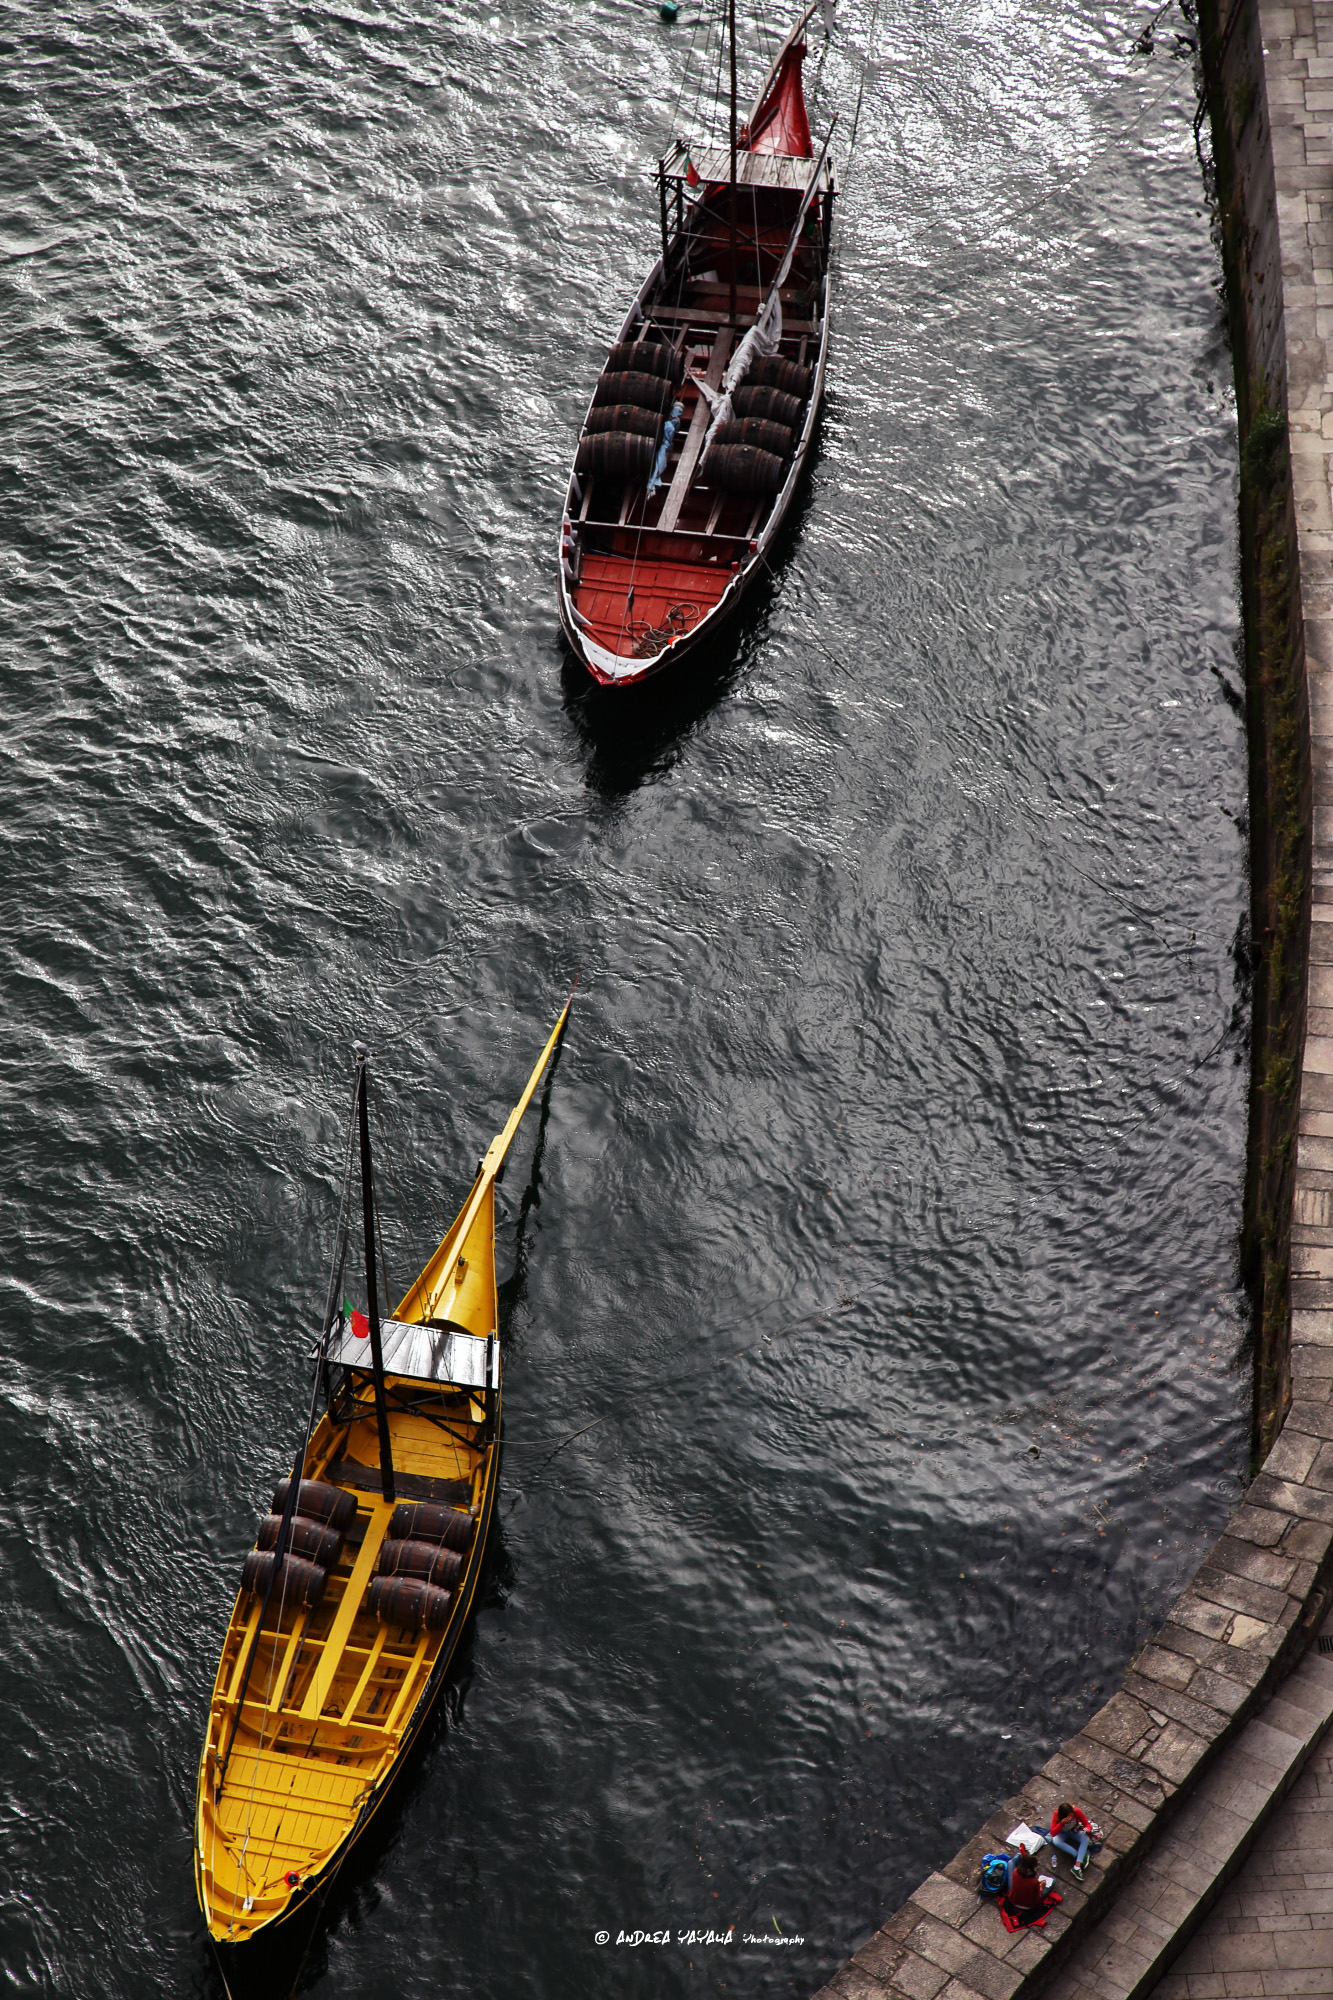 Picturesque loads of Porto...